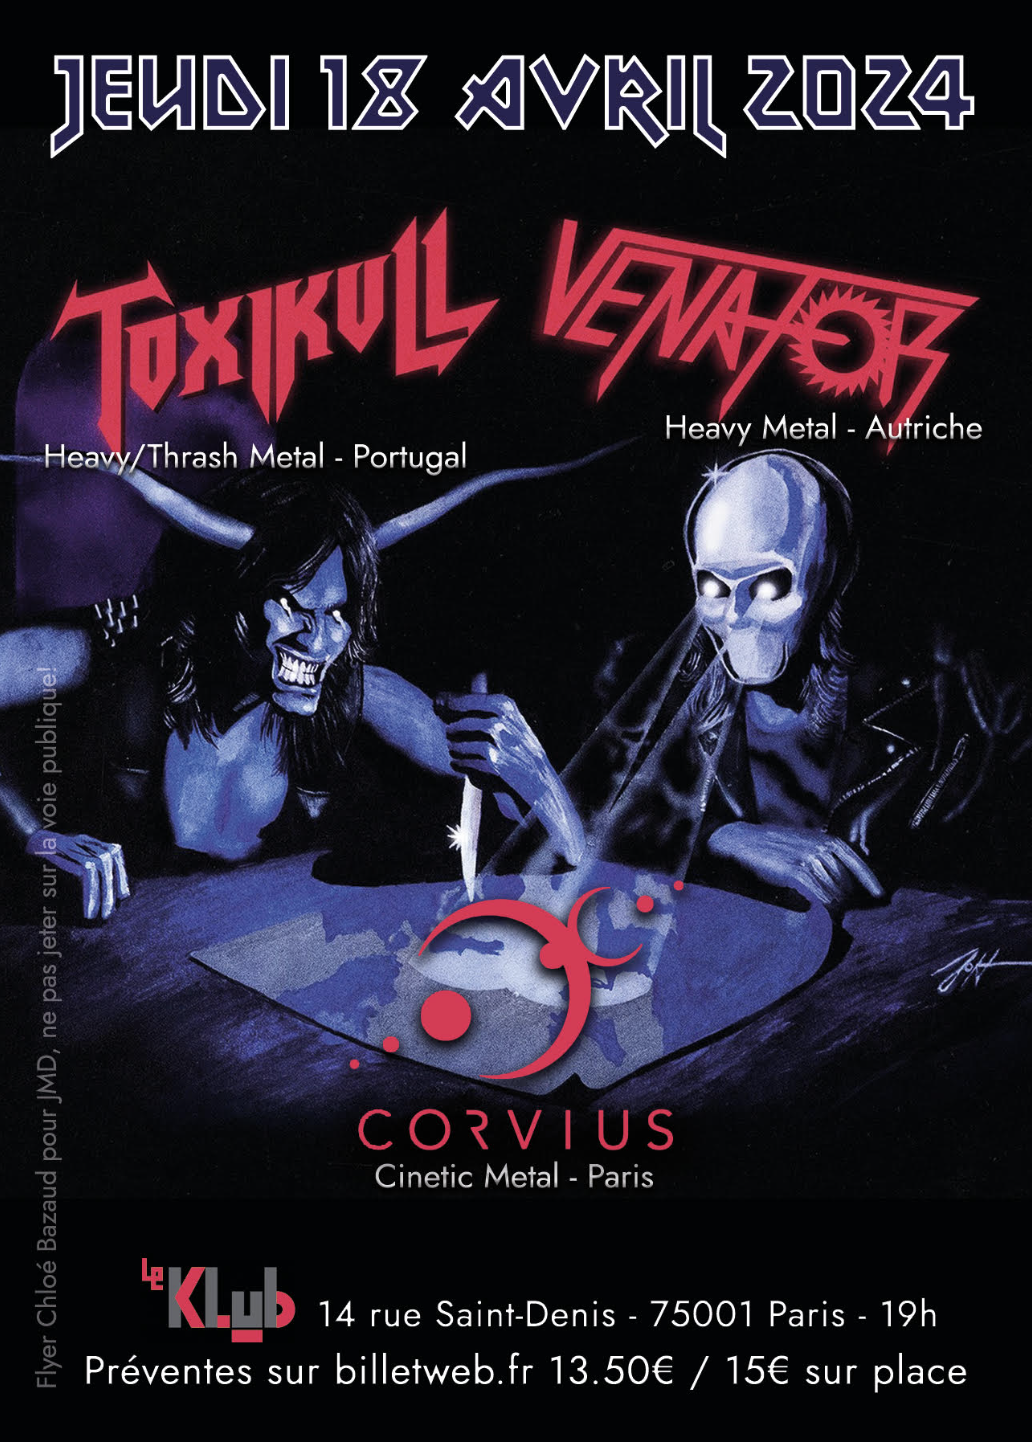 Toxikull + Venator + Corvius ■ 18.04